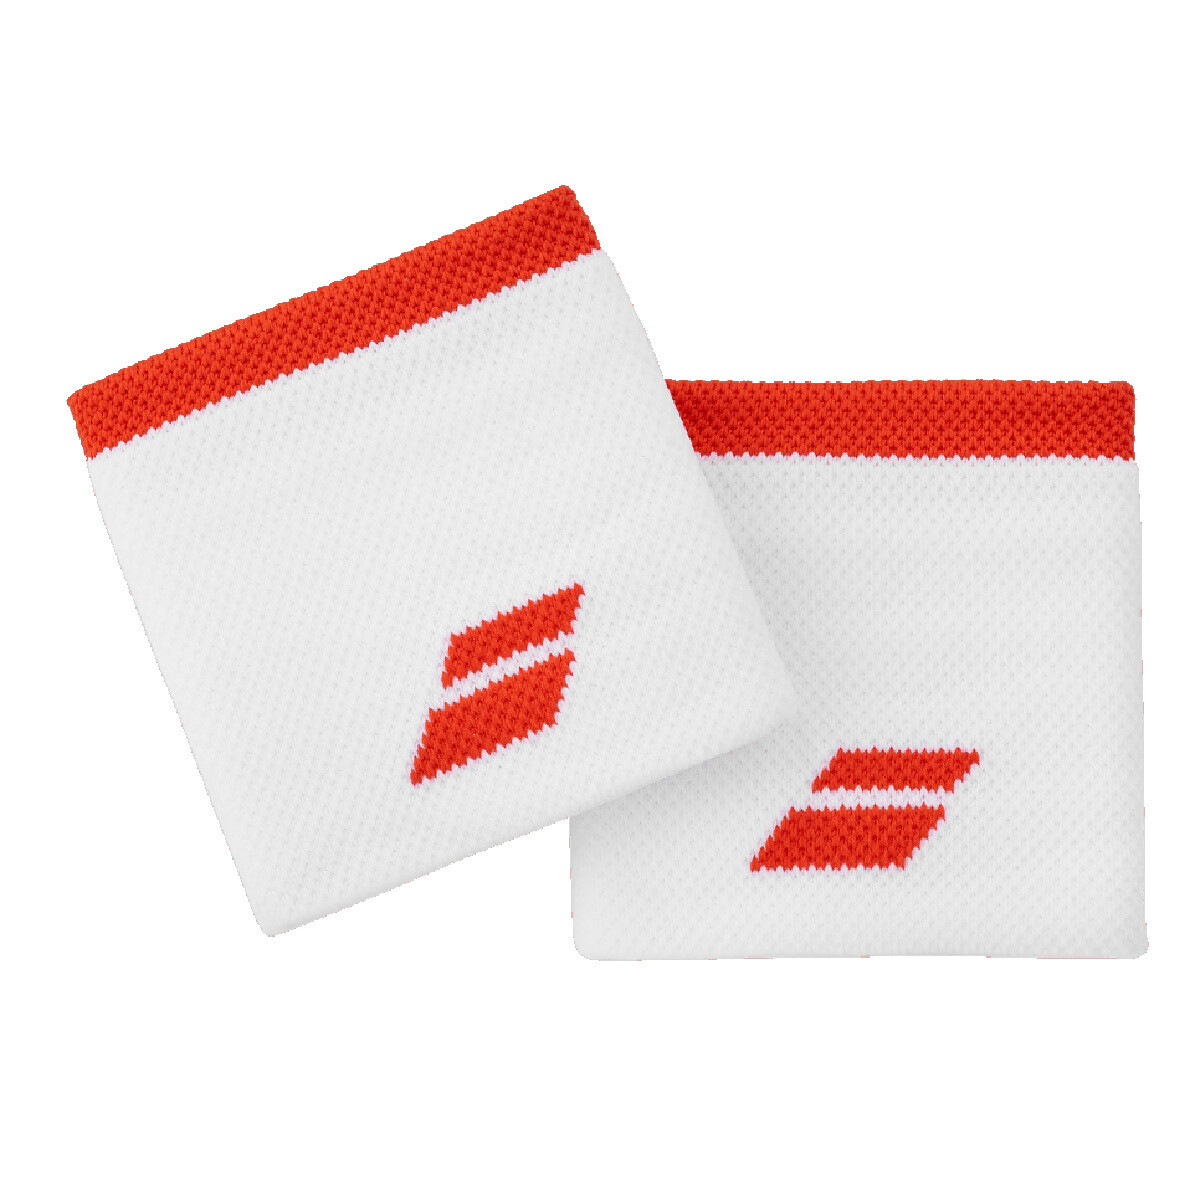 Babolat Logo Wristbands Pair - White/Fiesta Red